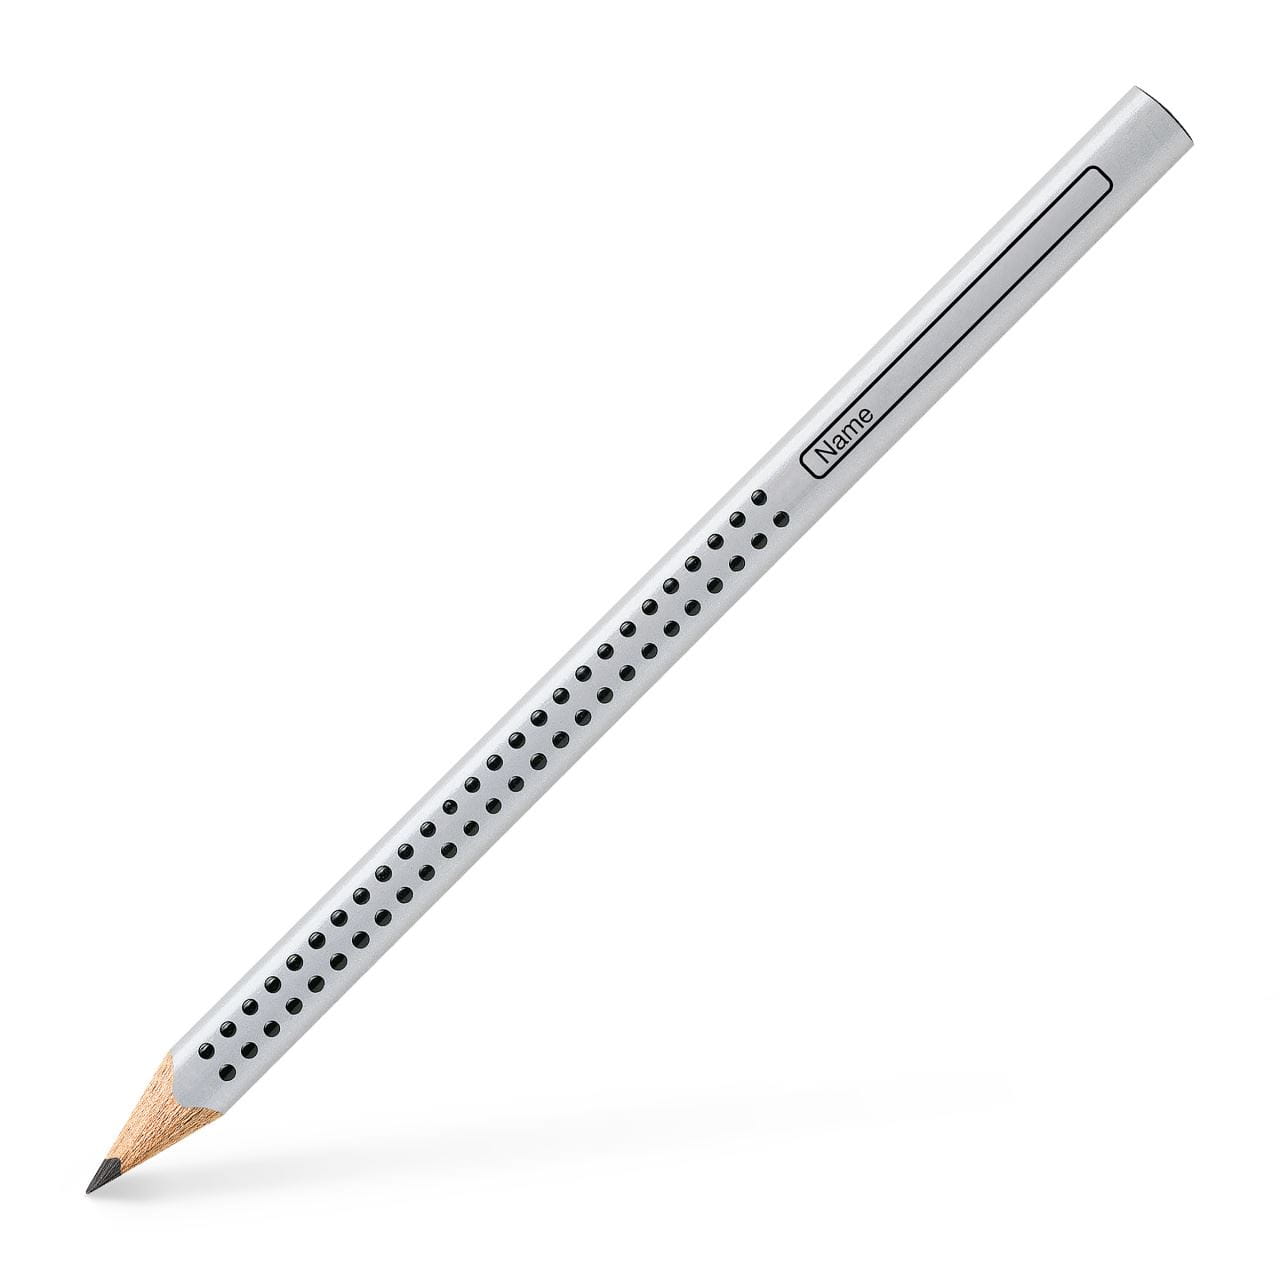 Faber-Castell - Jumbo Grip graphite pencil, B, silver